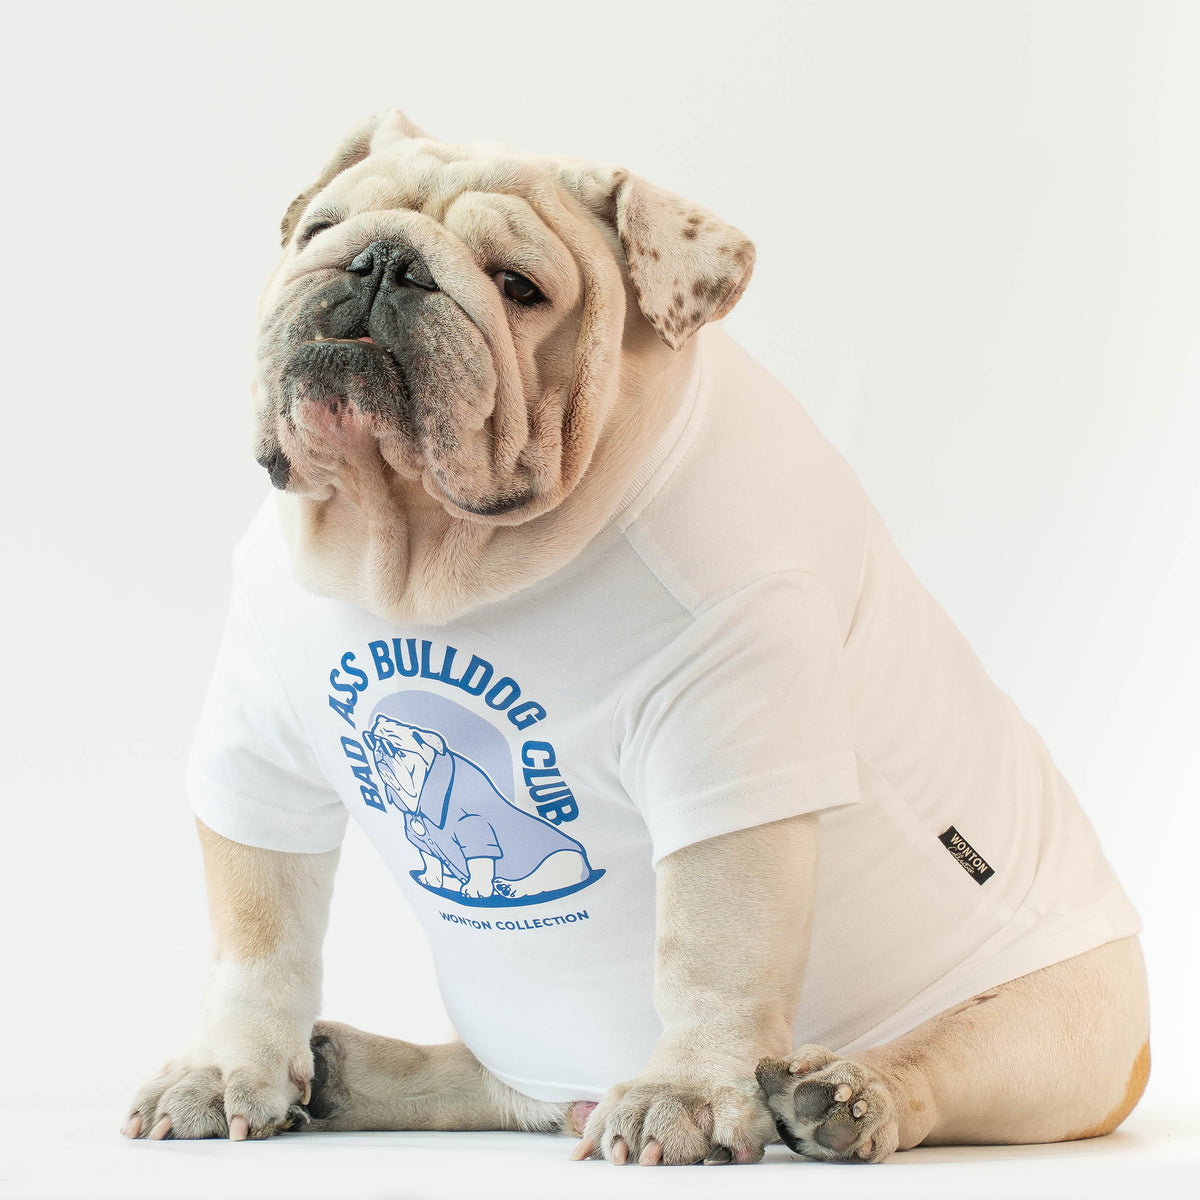 WONTON BAD ASS BULLDOG CLUB t-shirt in white and blue – Wonton